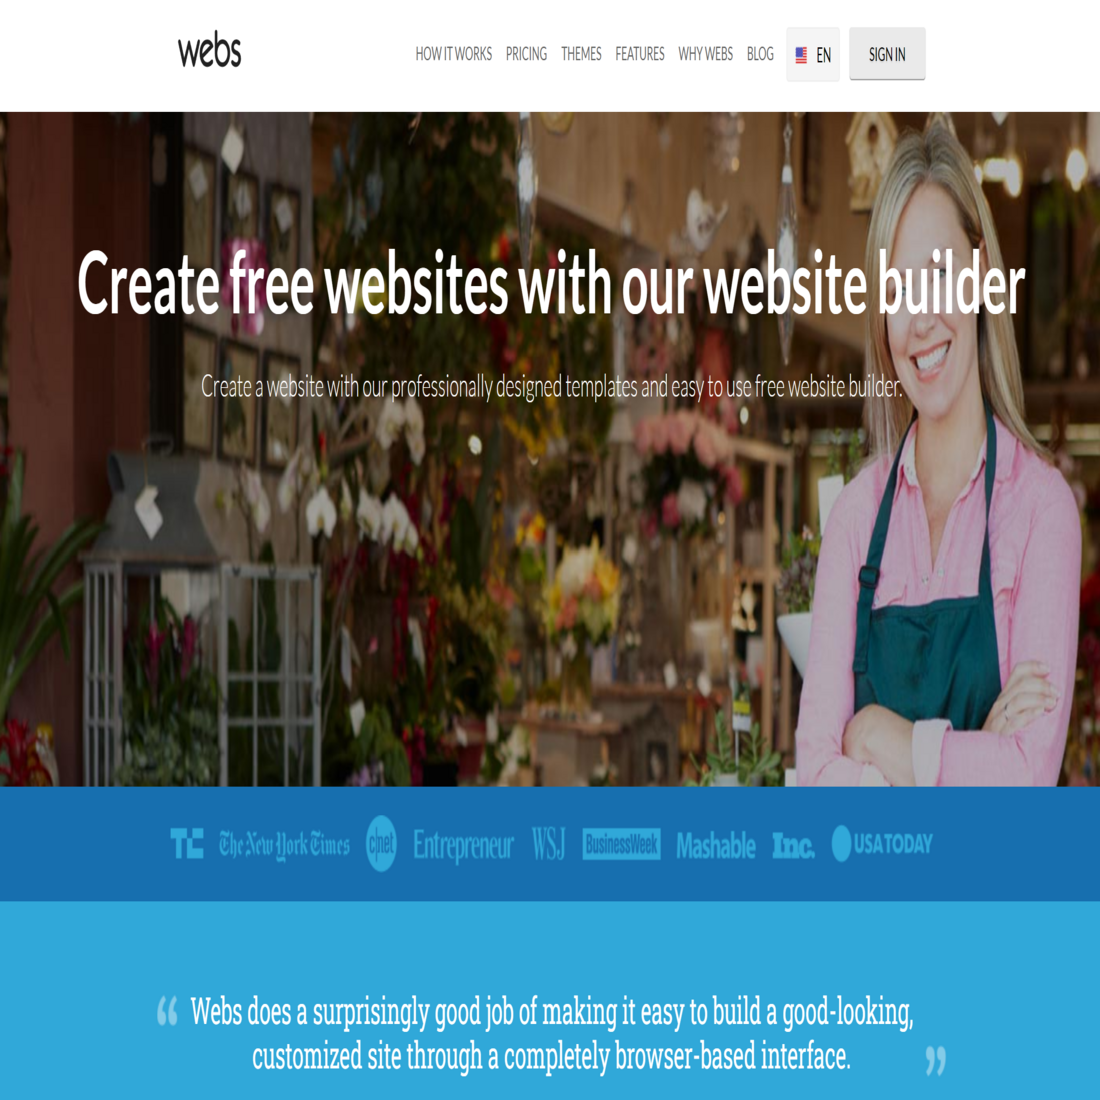 Webs.com website builder